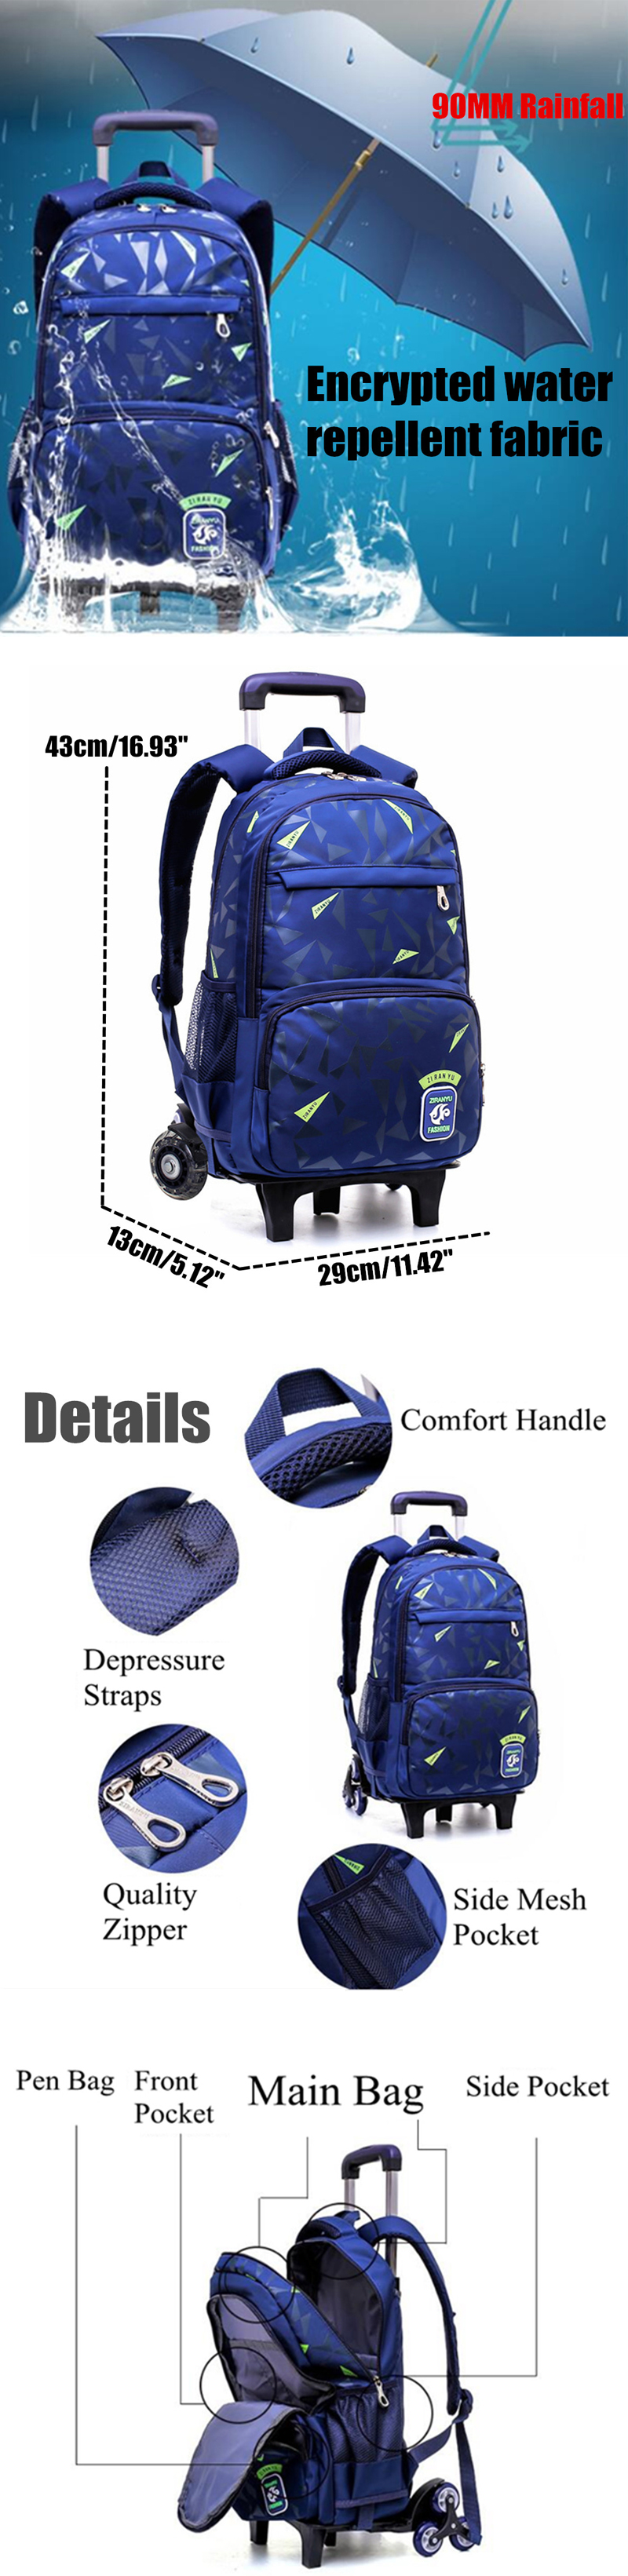 26-Wheels-Trolley-Backpack-Children-Kids-Student-School-Luggage-Bag-Outdoor-Travel-1531417-1